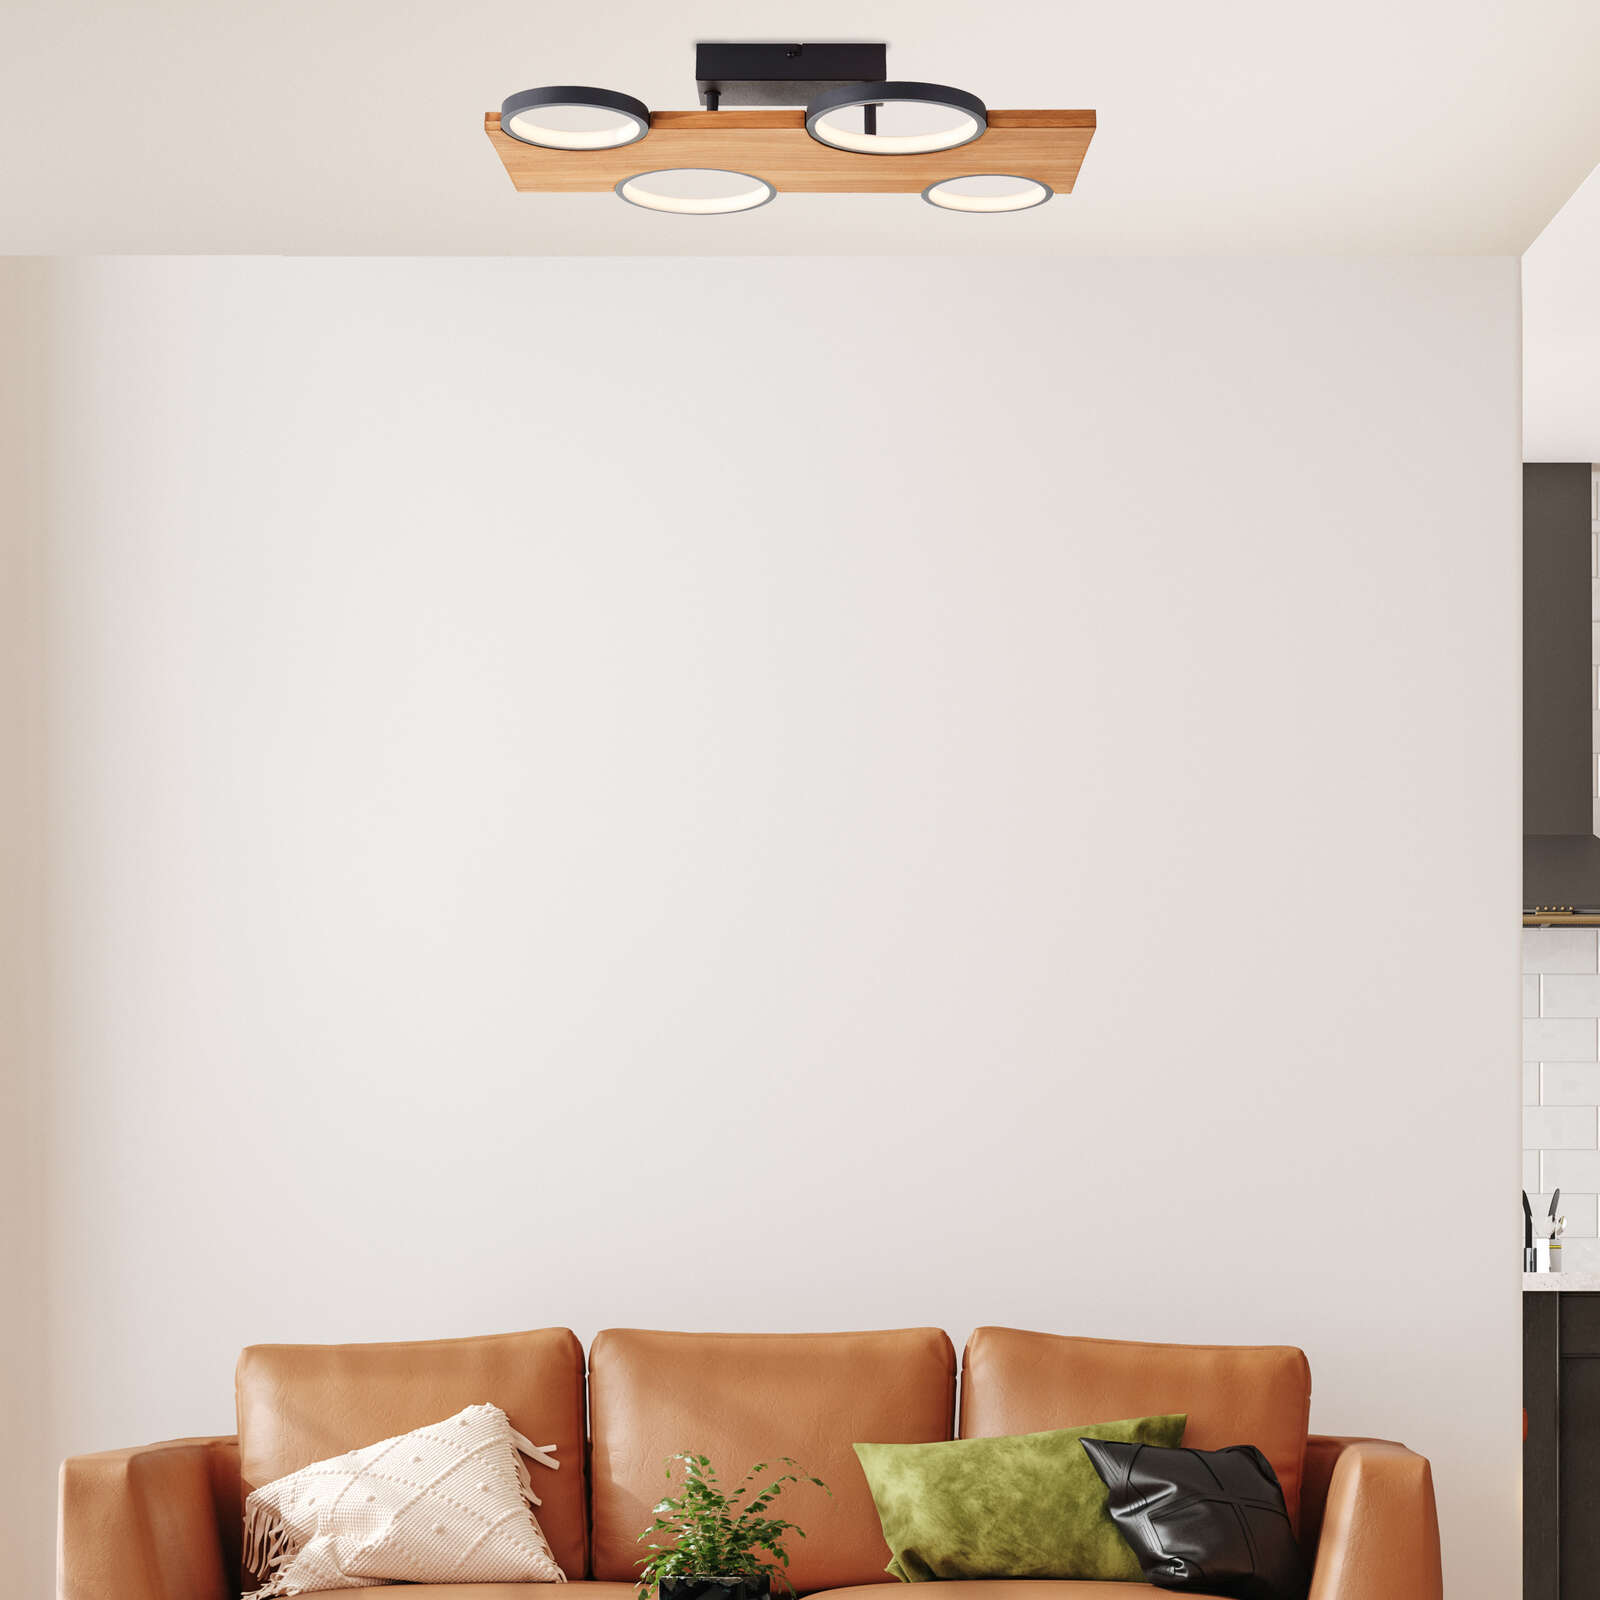             Wooden ceiling light - Elena 3 - Brown
        